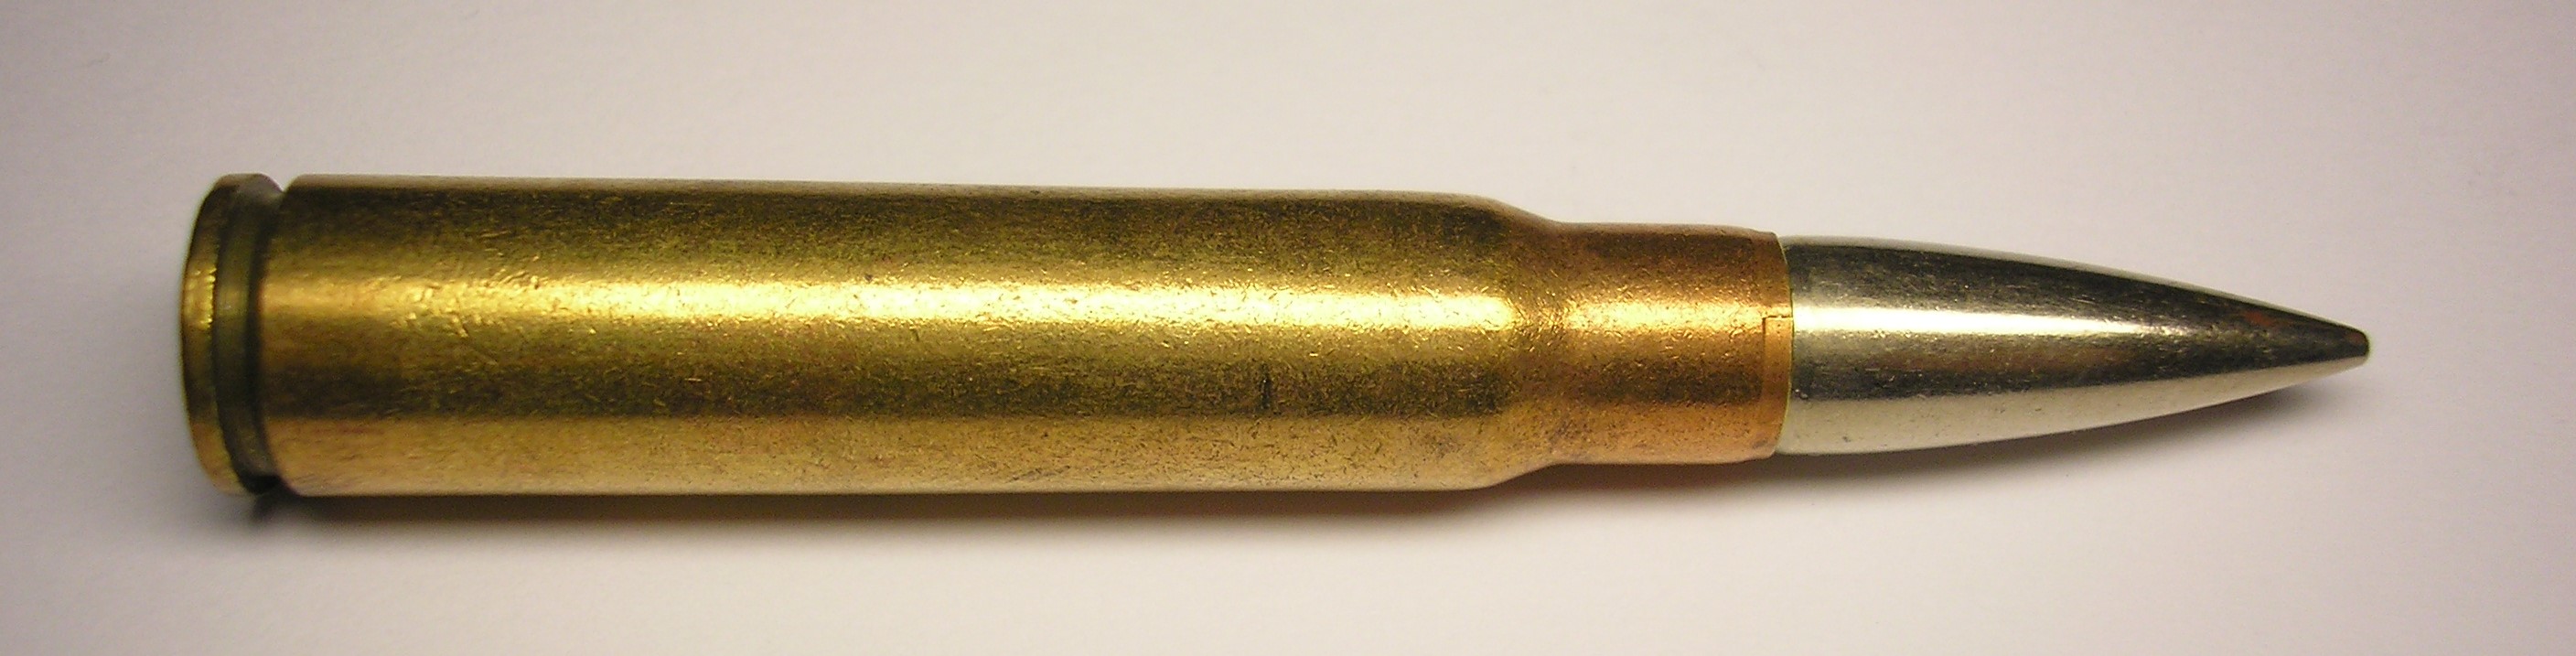 ./ammo/792x57/esker/Eske-792x57-RA-helmantel-15skudd-S-S-1932-5.JPG